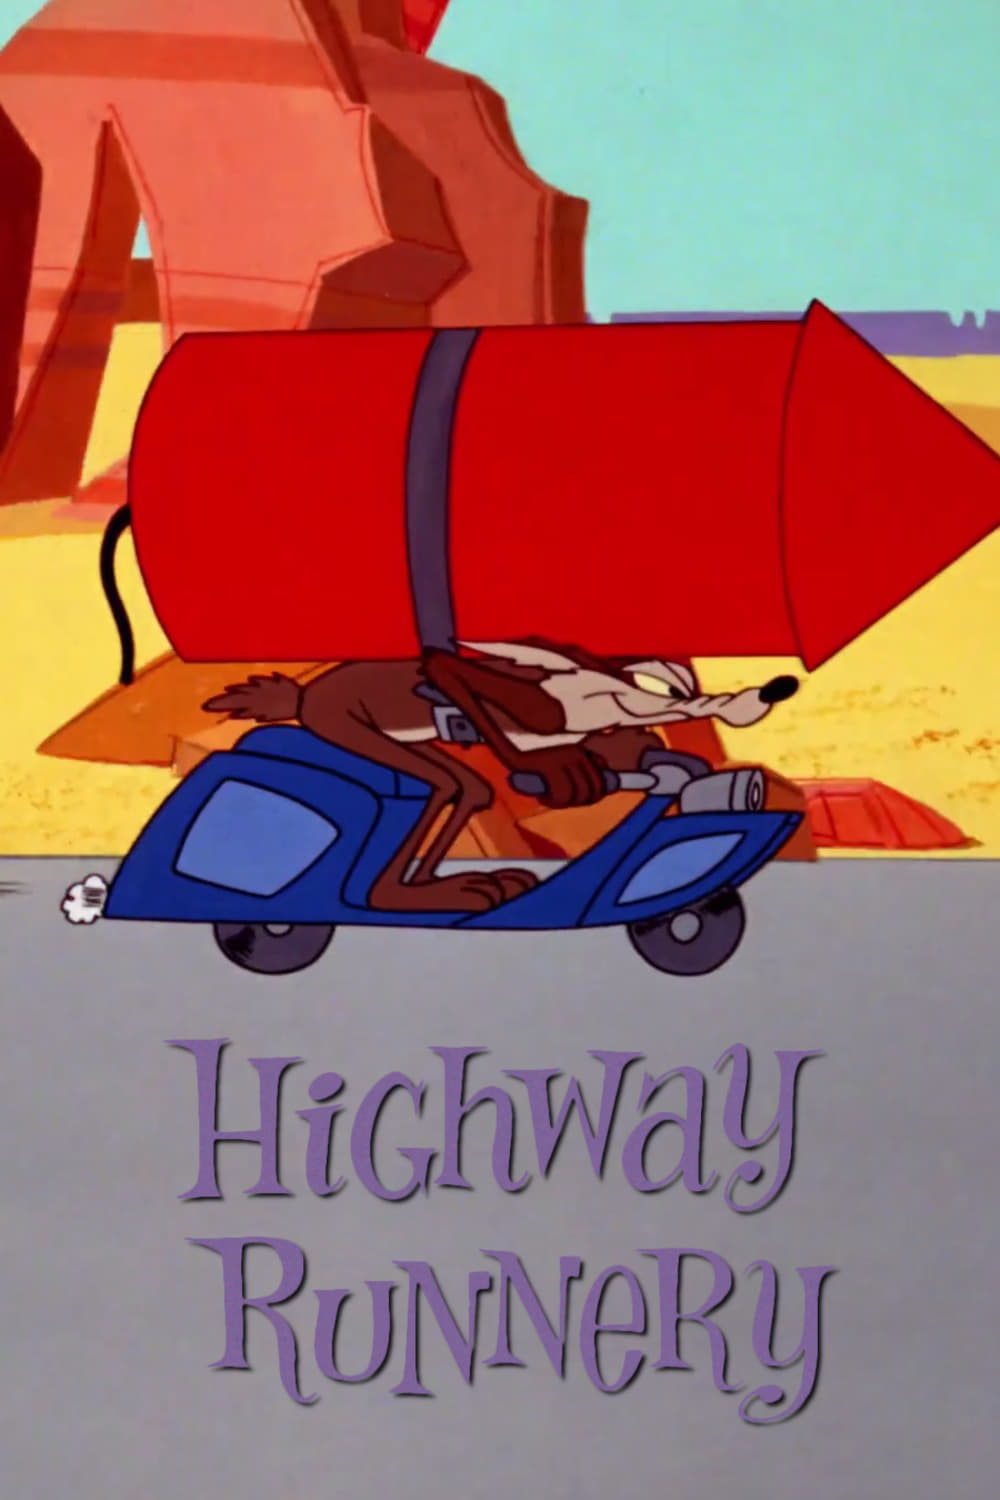 Highway Runnery